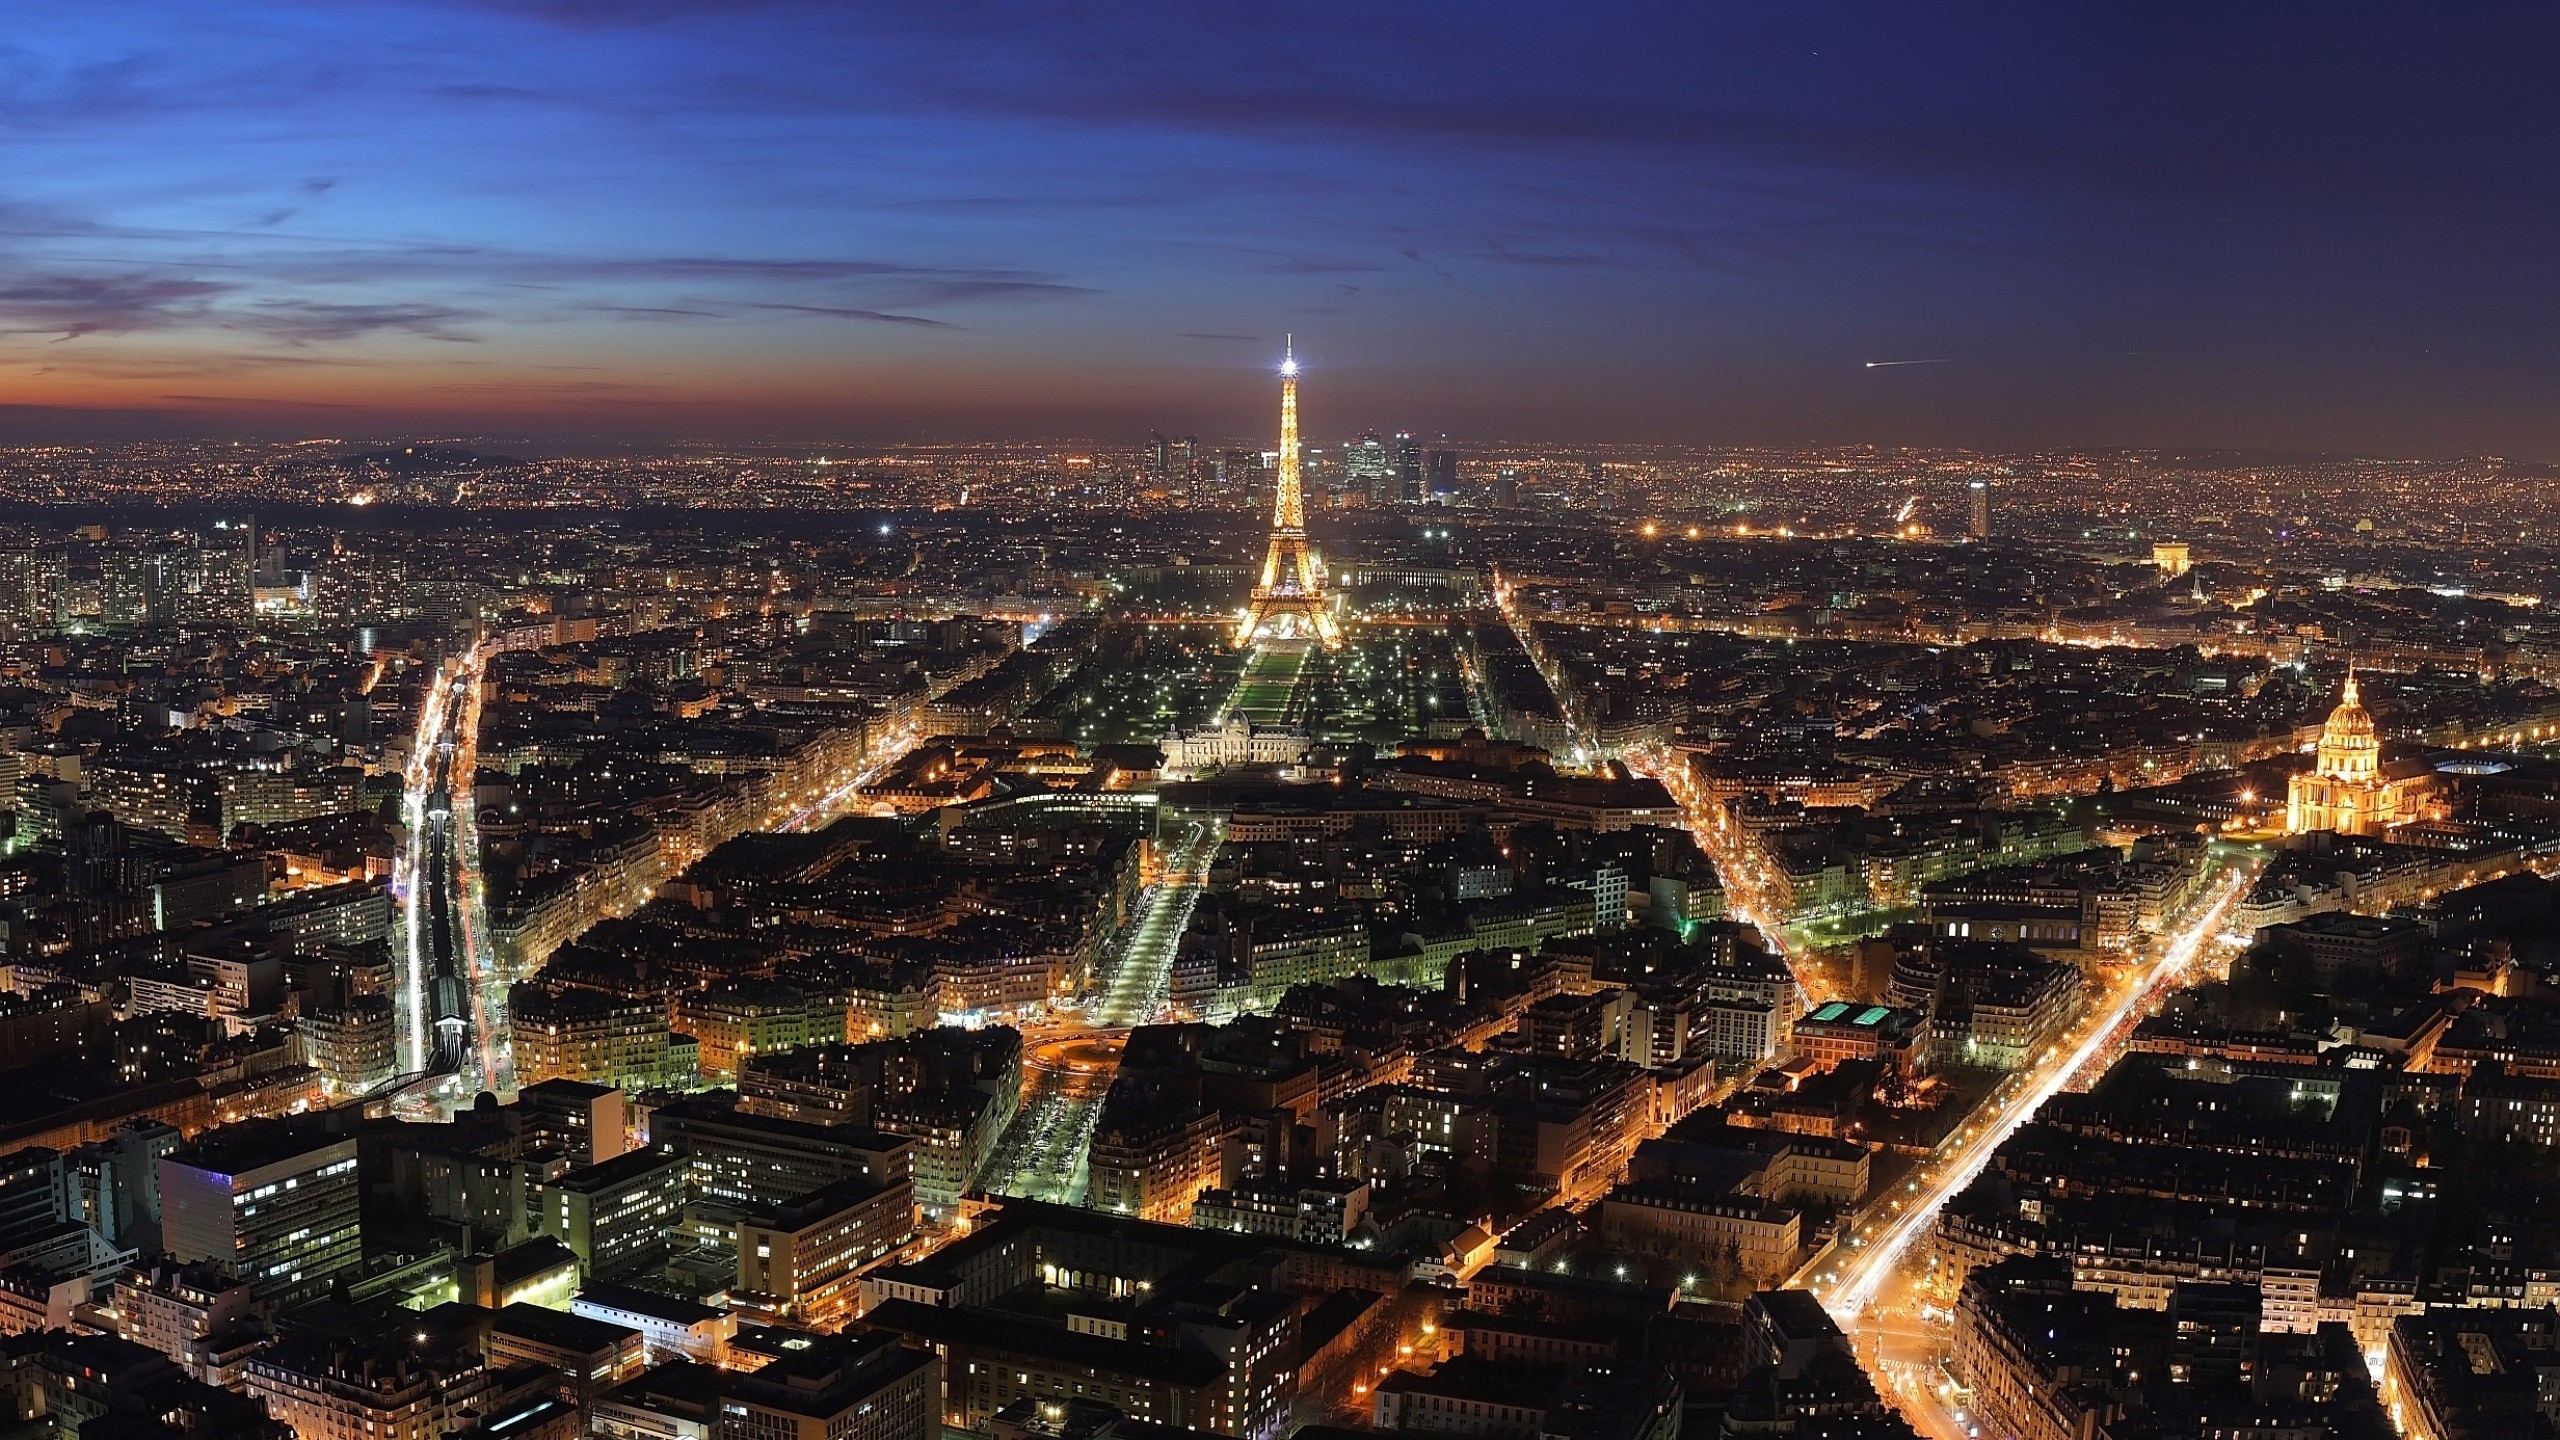 Paris seen at night for 2560x1440 HDTV resolution